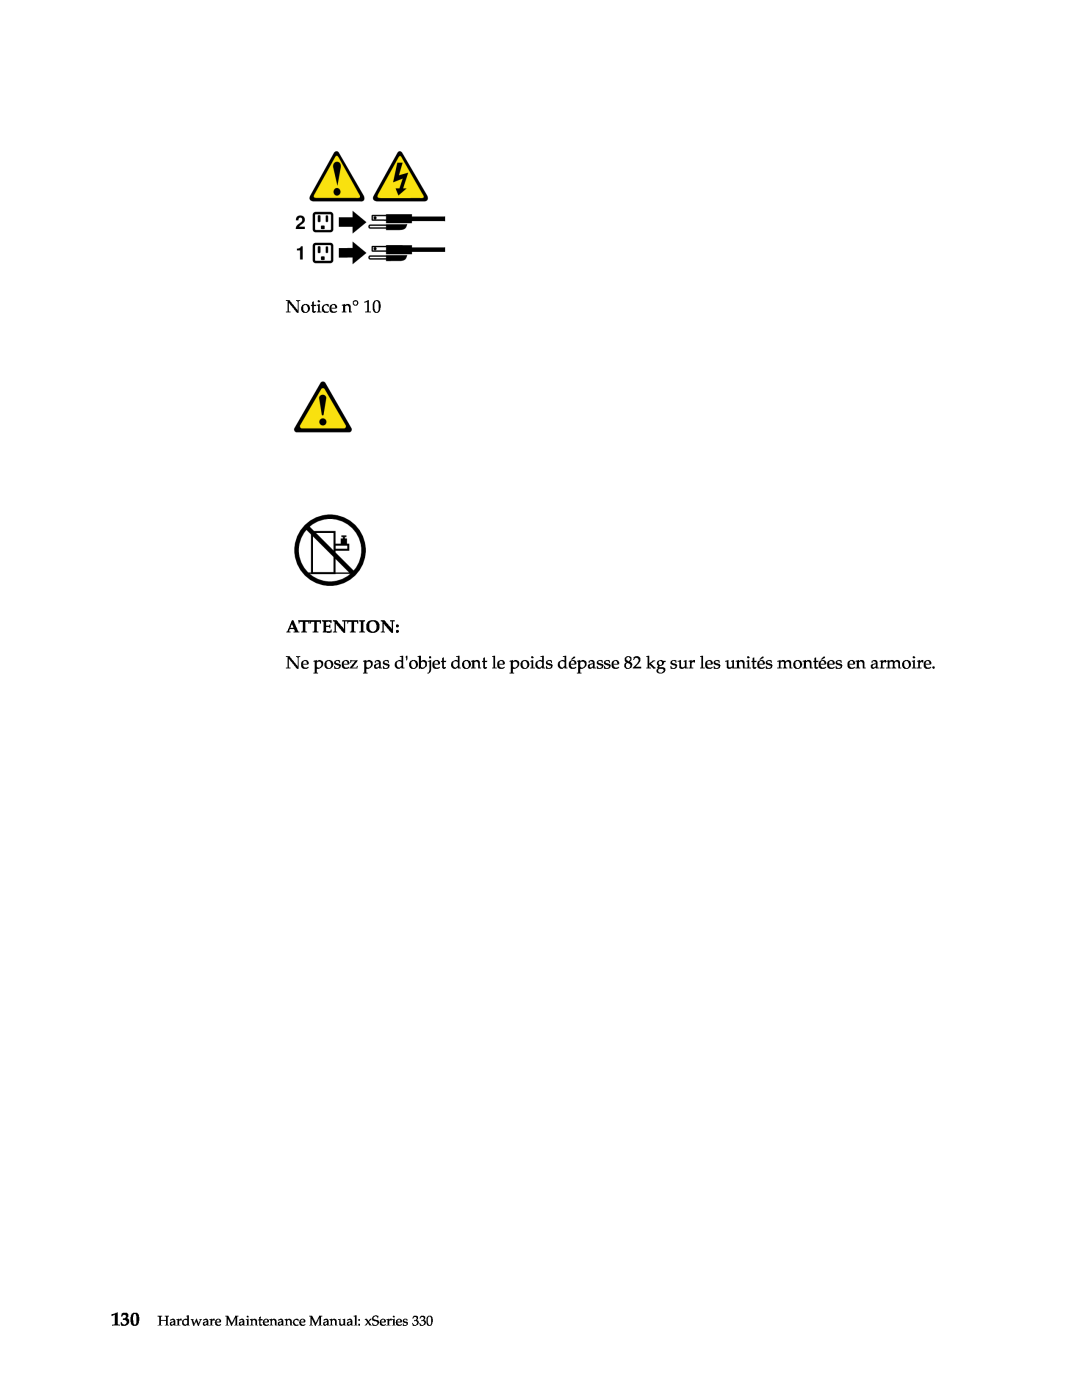 IBM xSeries 330 manual Notice n, Hardware Maintenance Manual: xSeries 